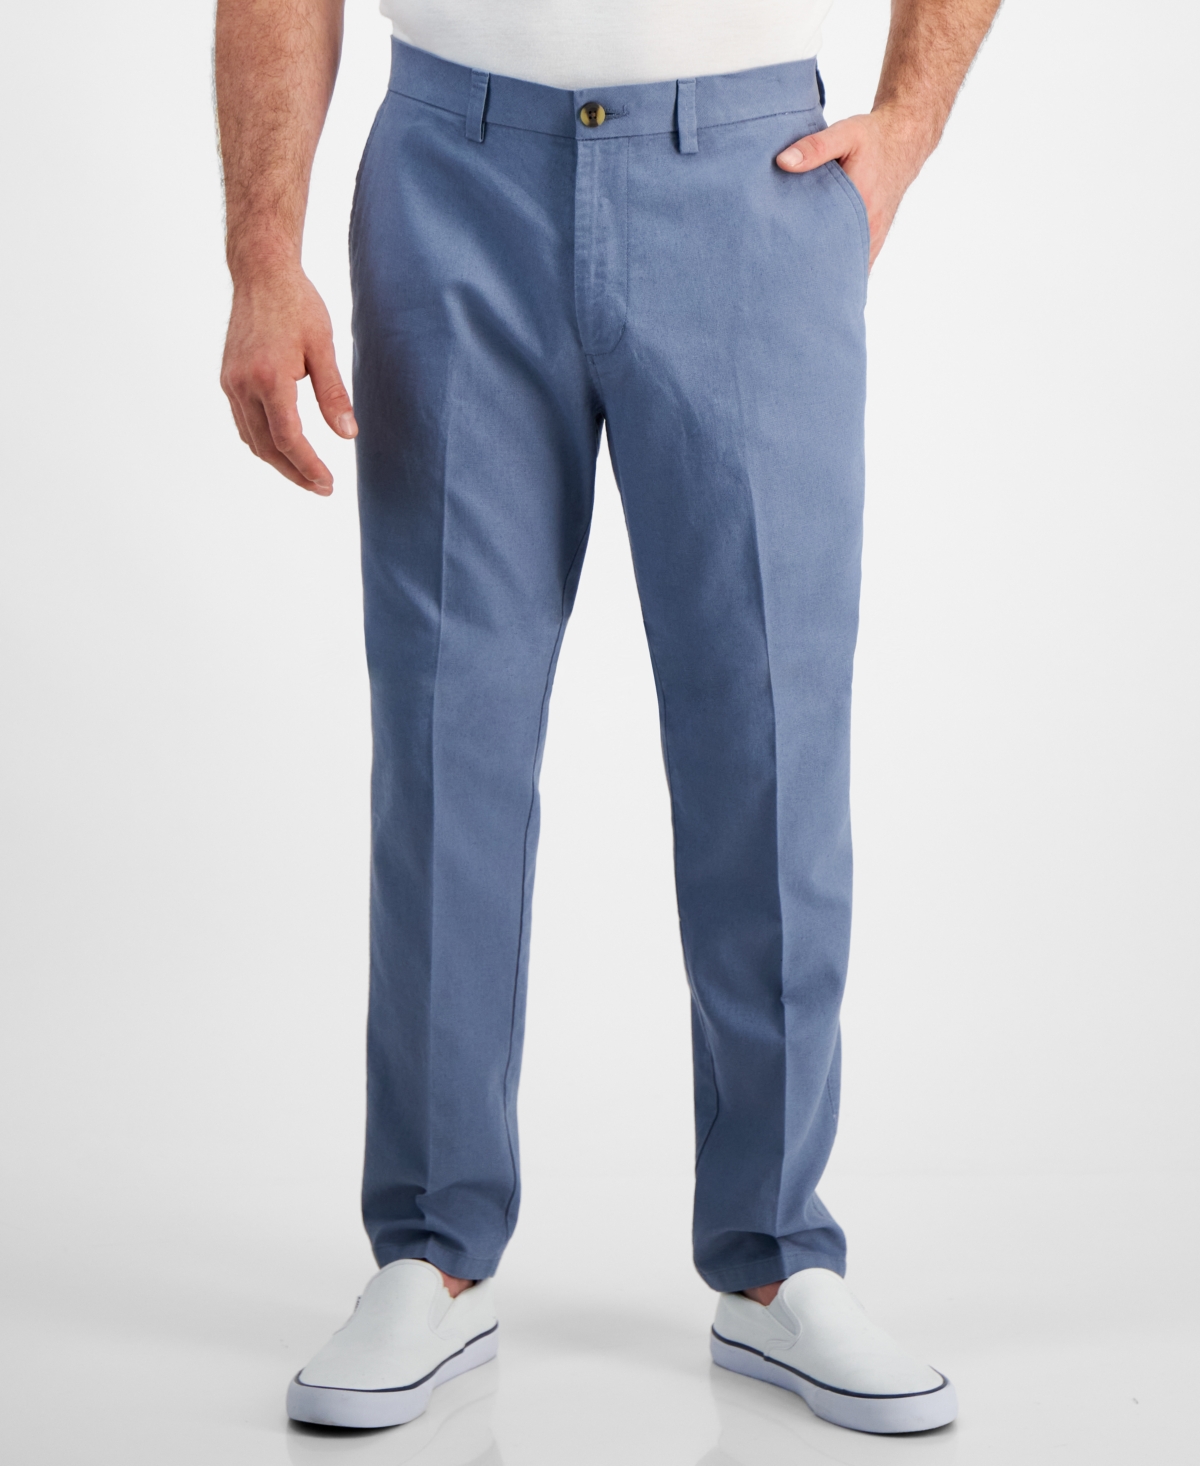 Men's Slim-Fit Linen Pants - White